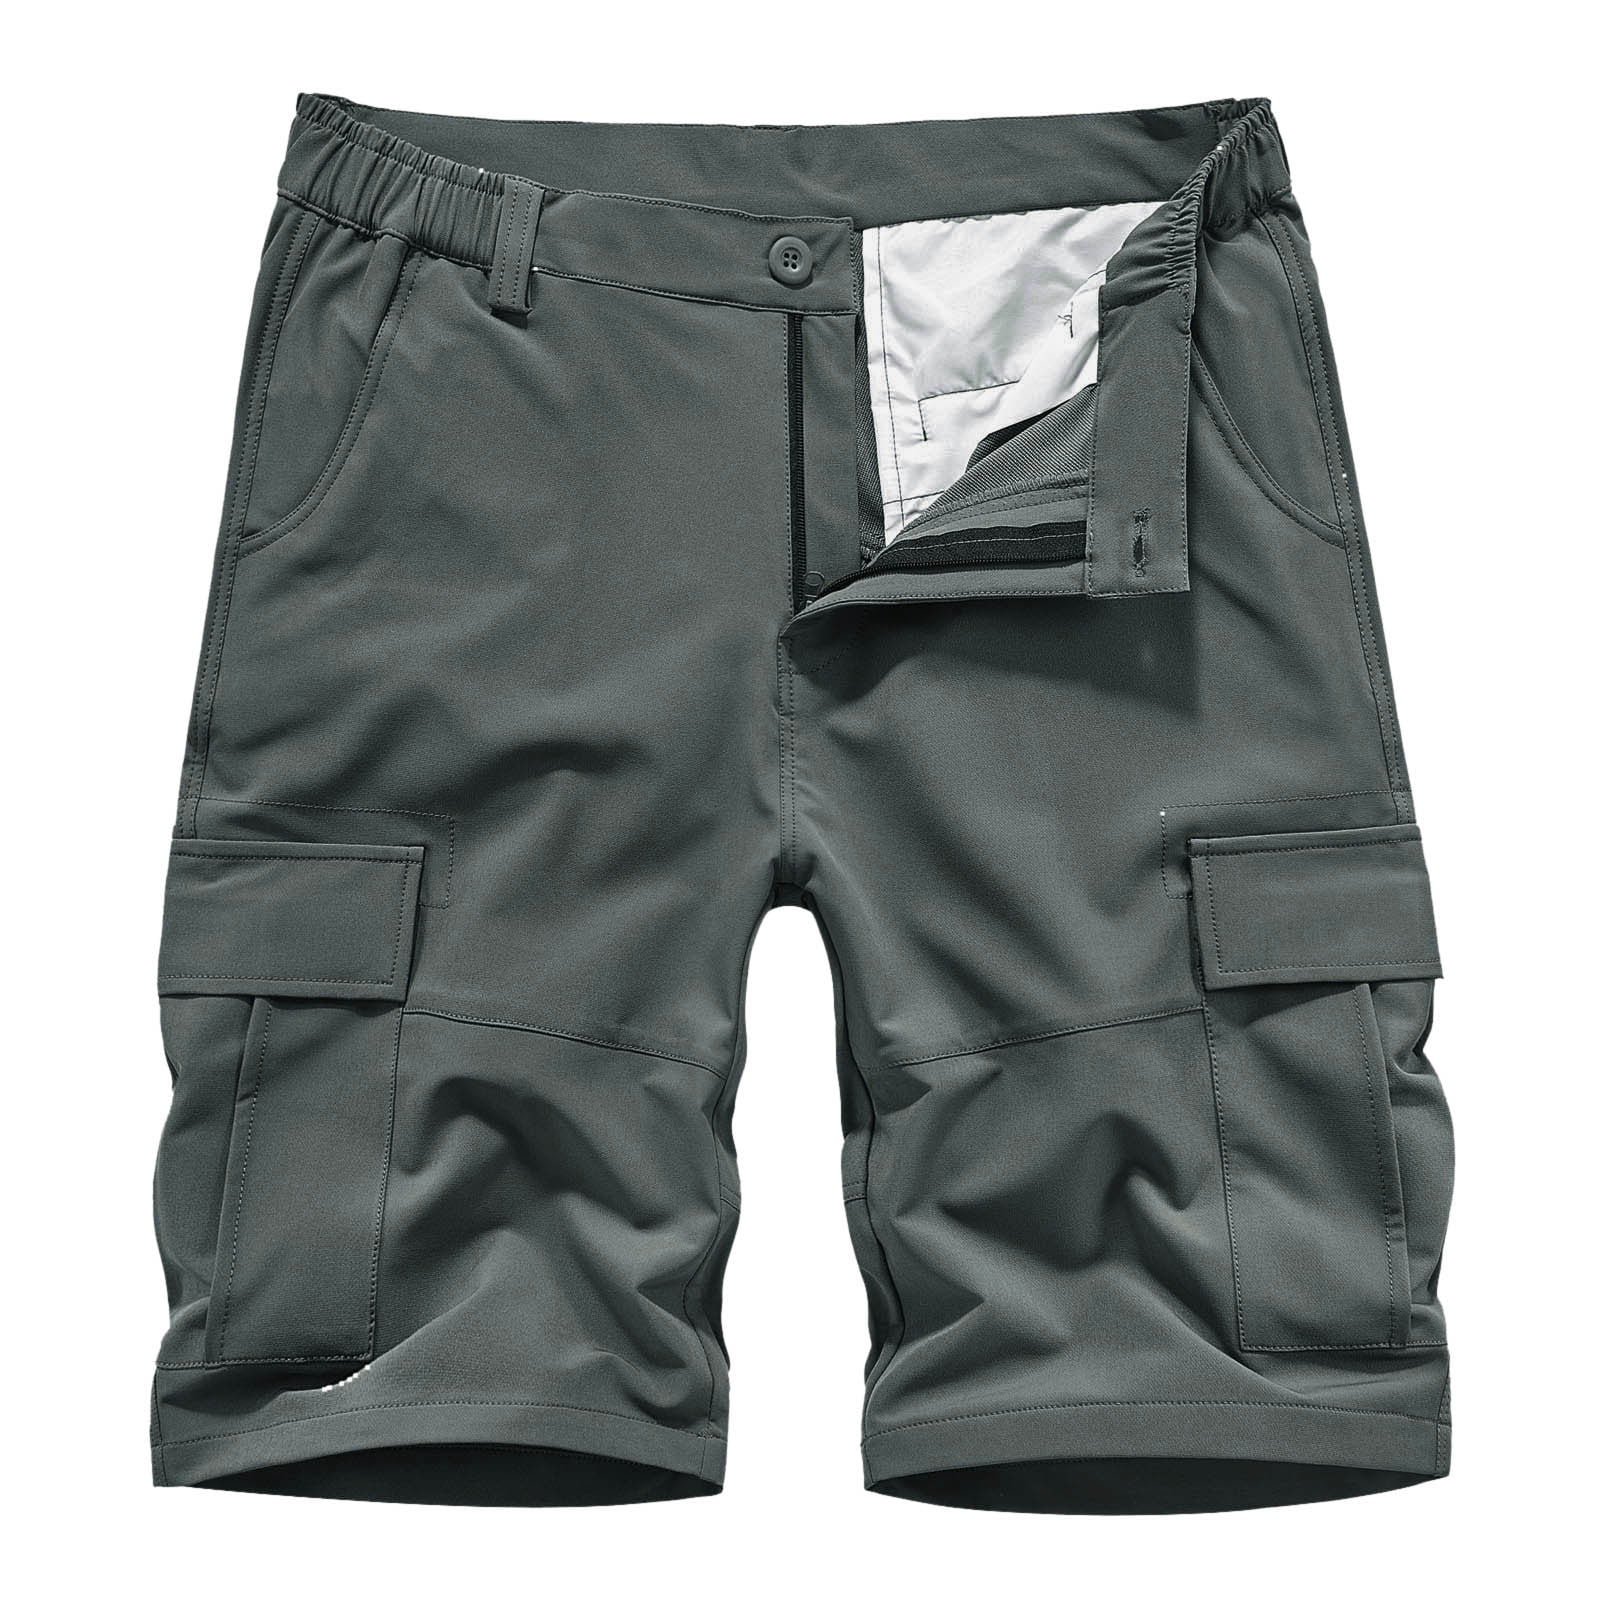 8QIDA Men's Slim Fit Stretch Denim Shorts Ripped Skinny Jean Shorts for ...